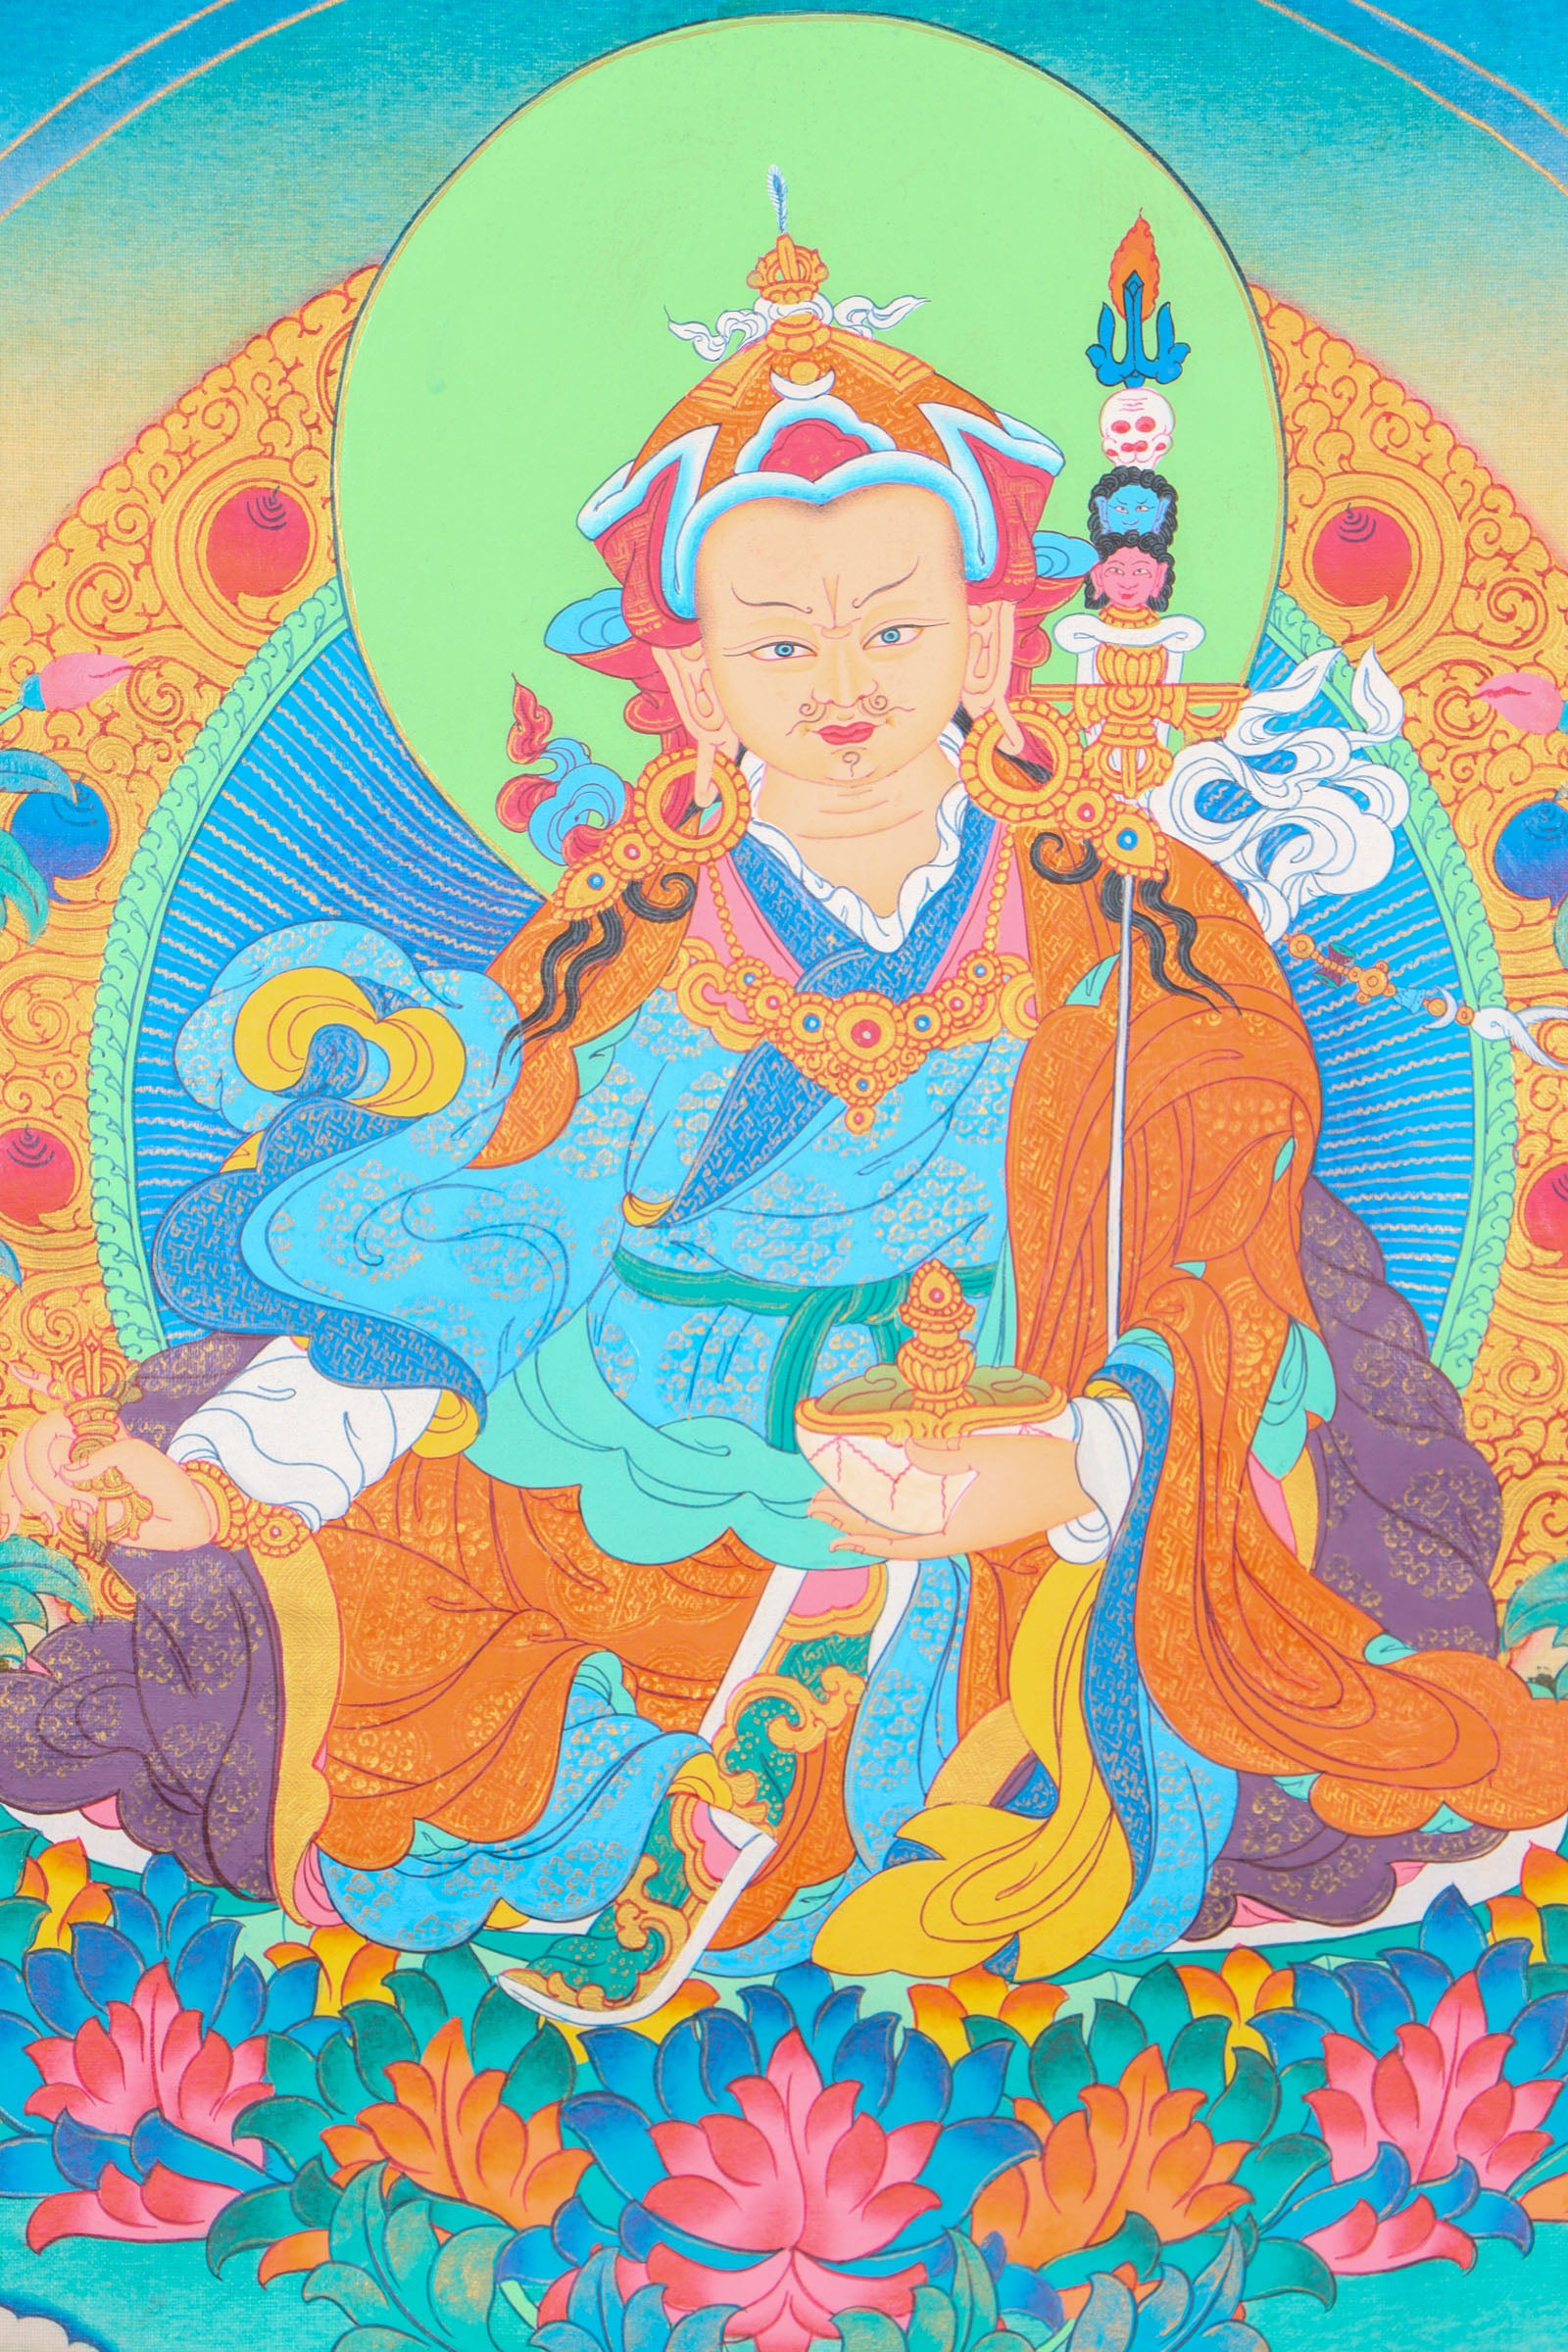 Guru Rinpoche Thangka for spirituality and meditation.